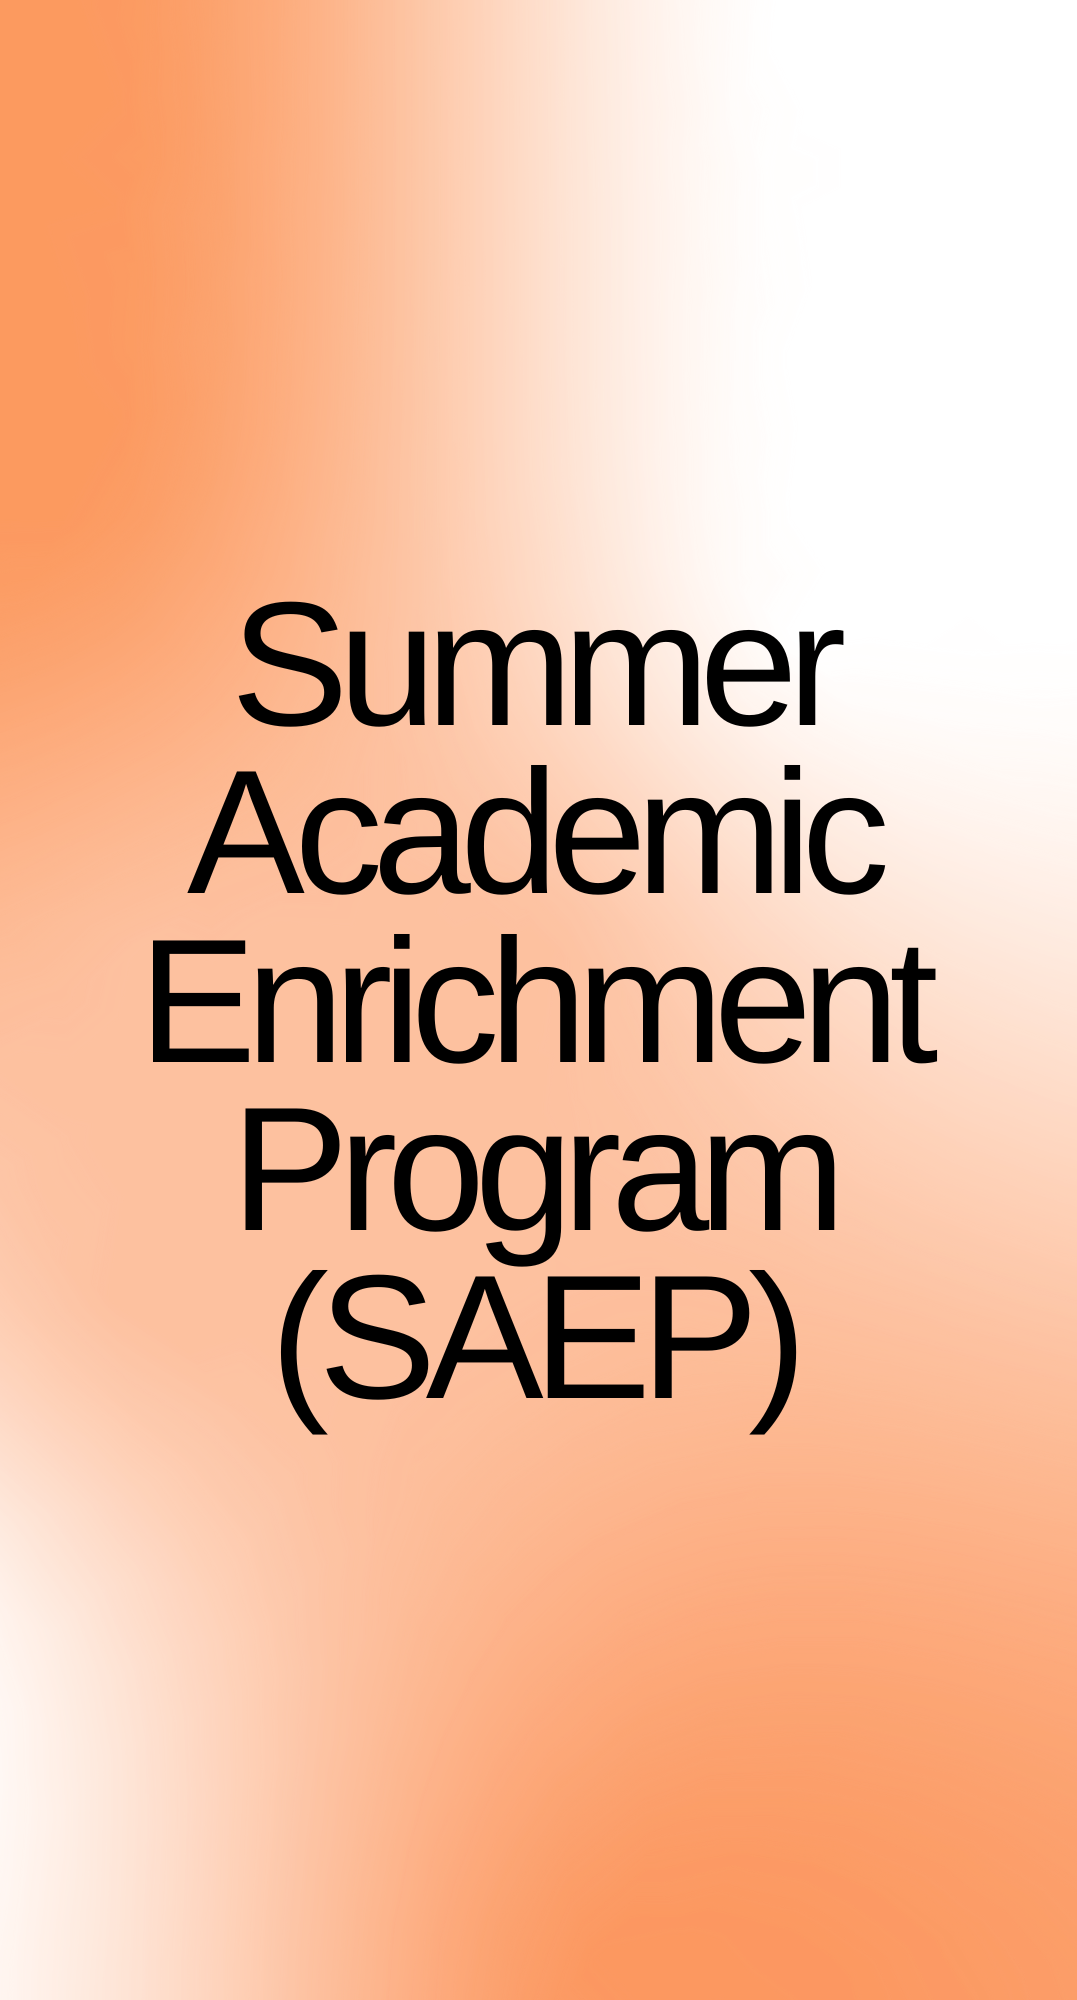 VCU Summer Academic Enrichment Program (SAEP) Division of Student